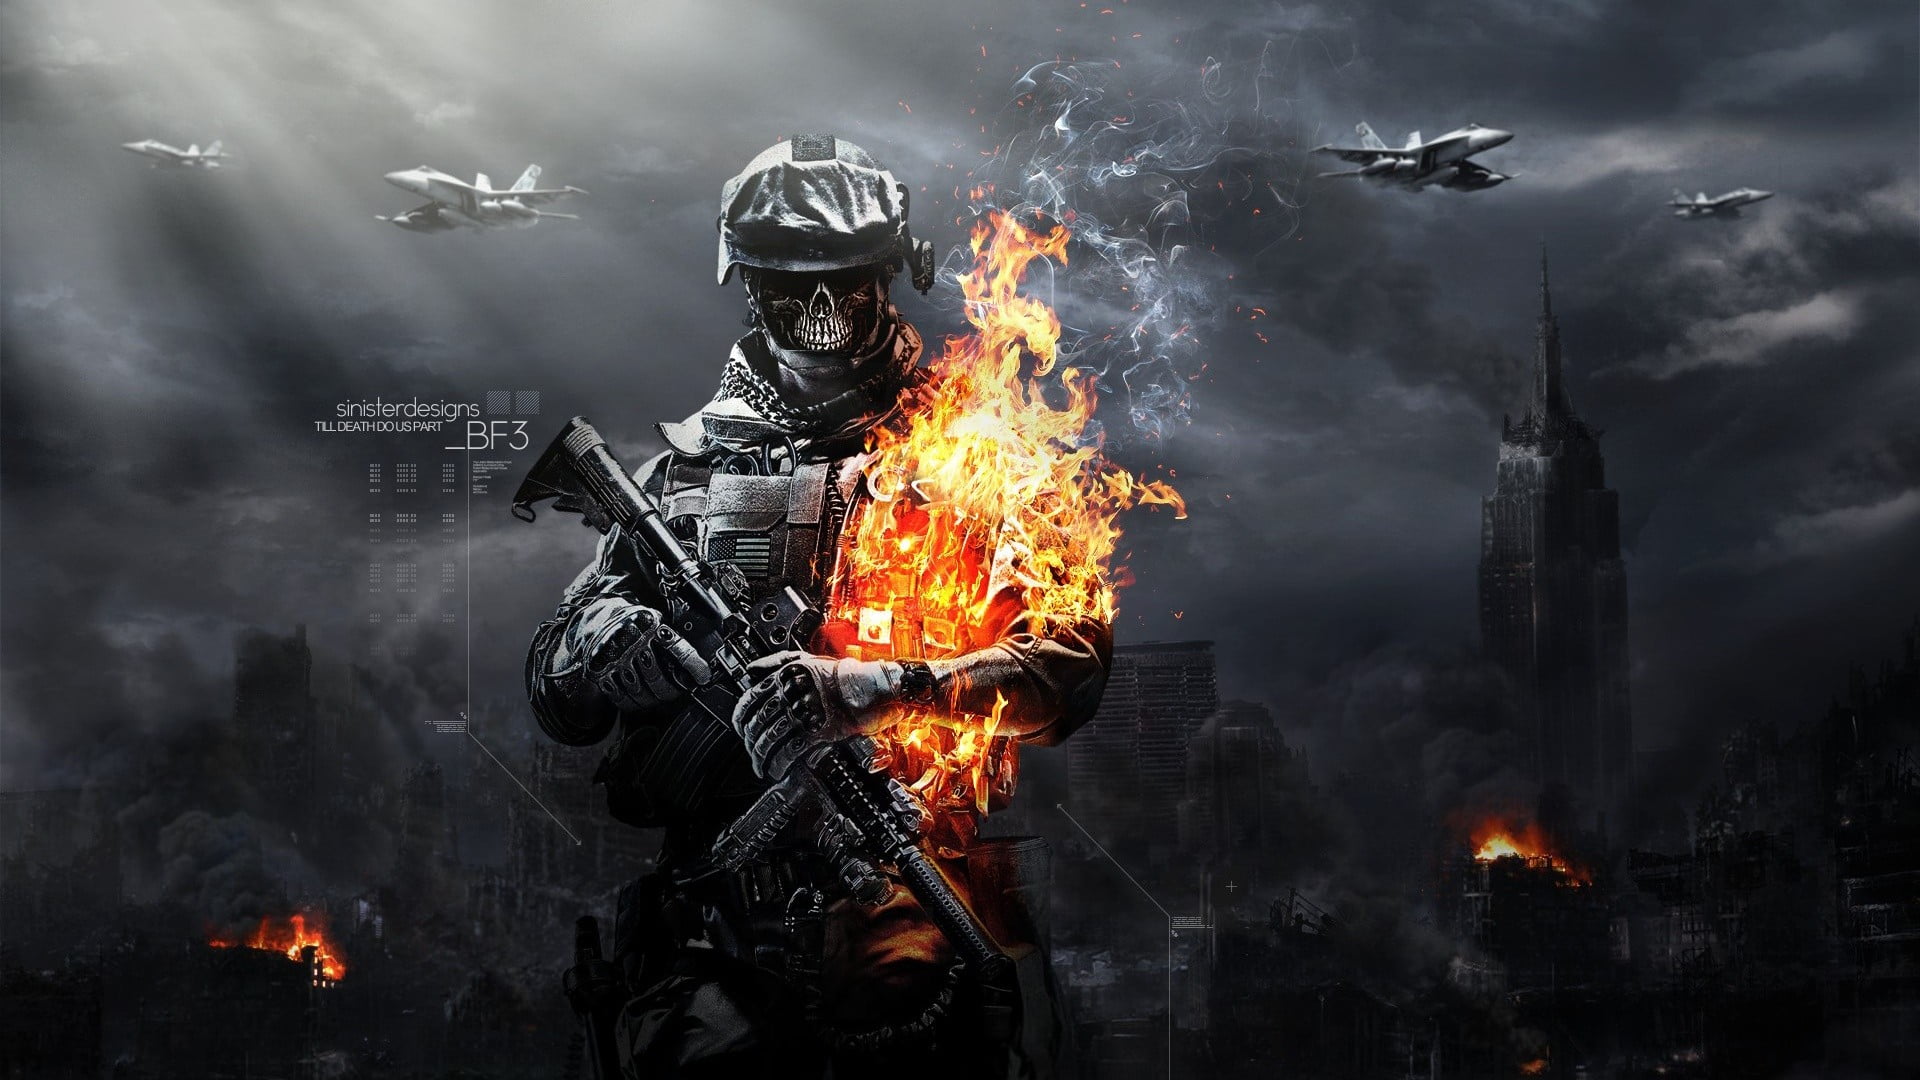 Battlefield 3 wallpaper, video games, skull, smoke - physical structure